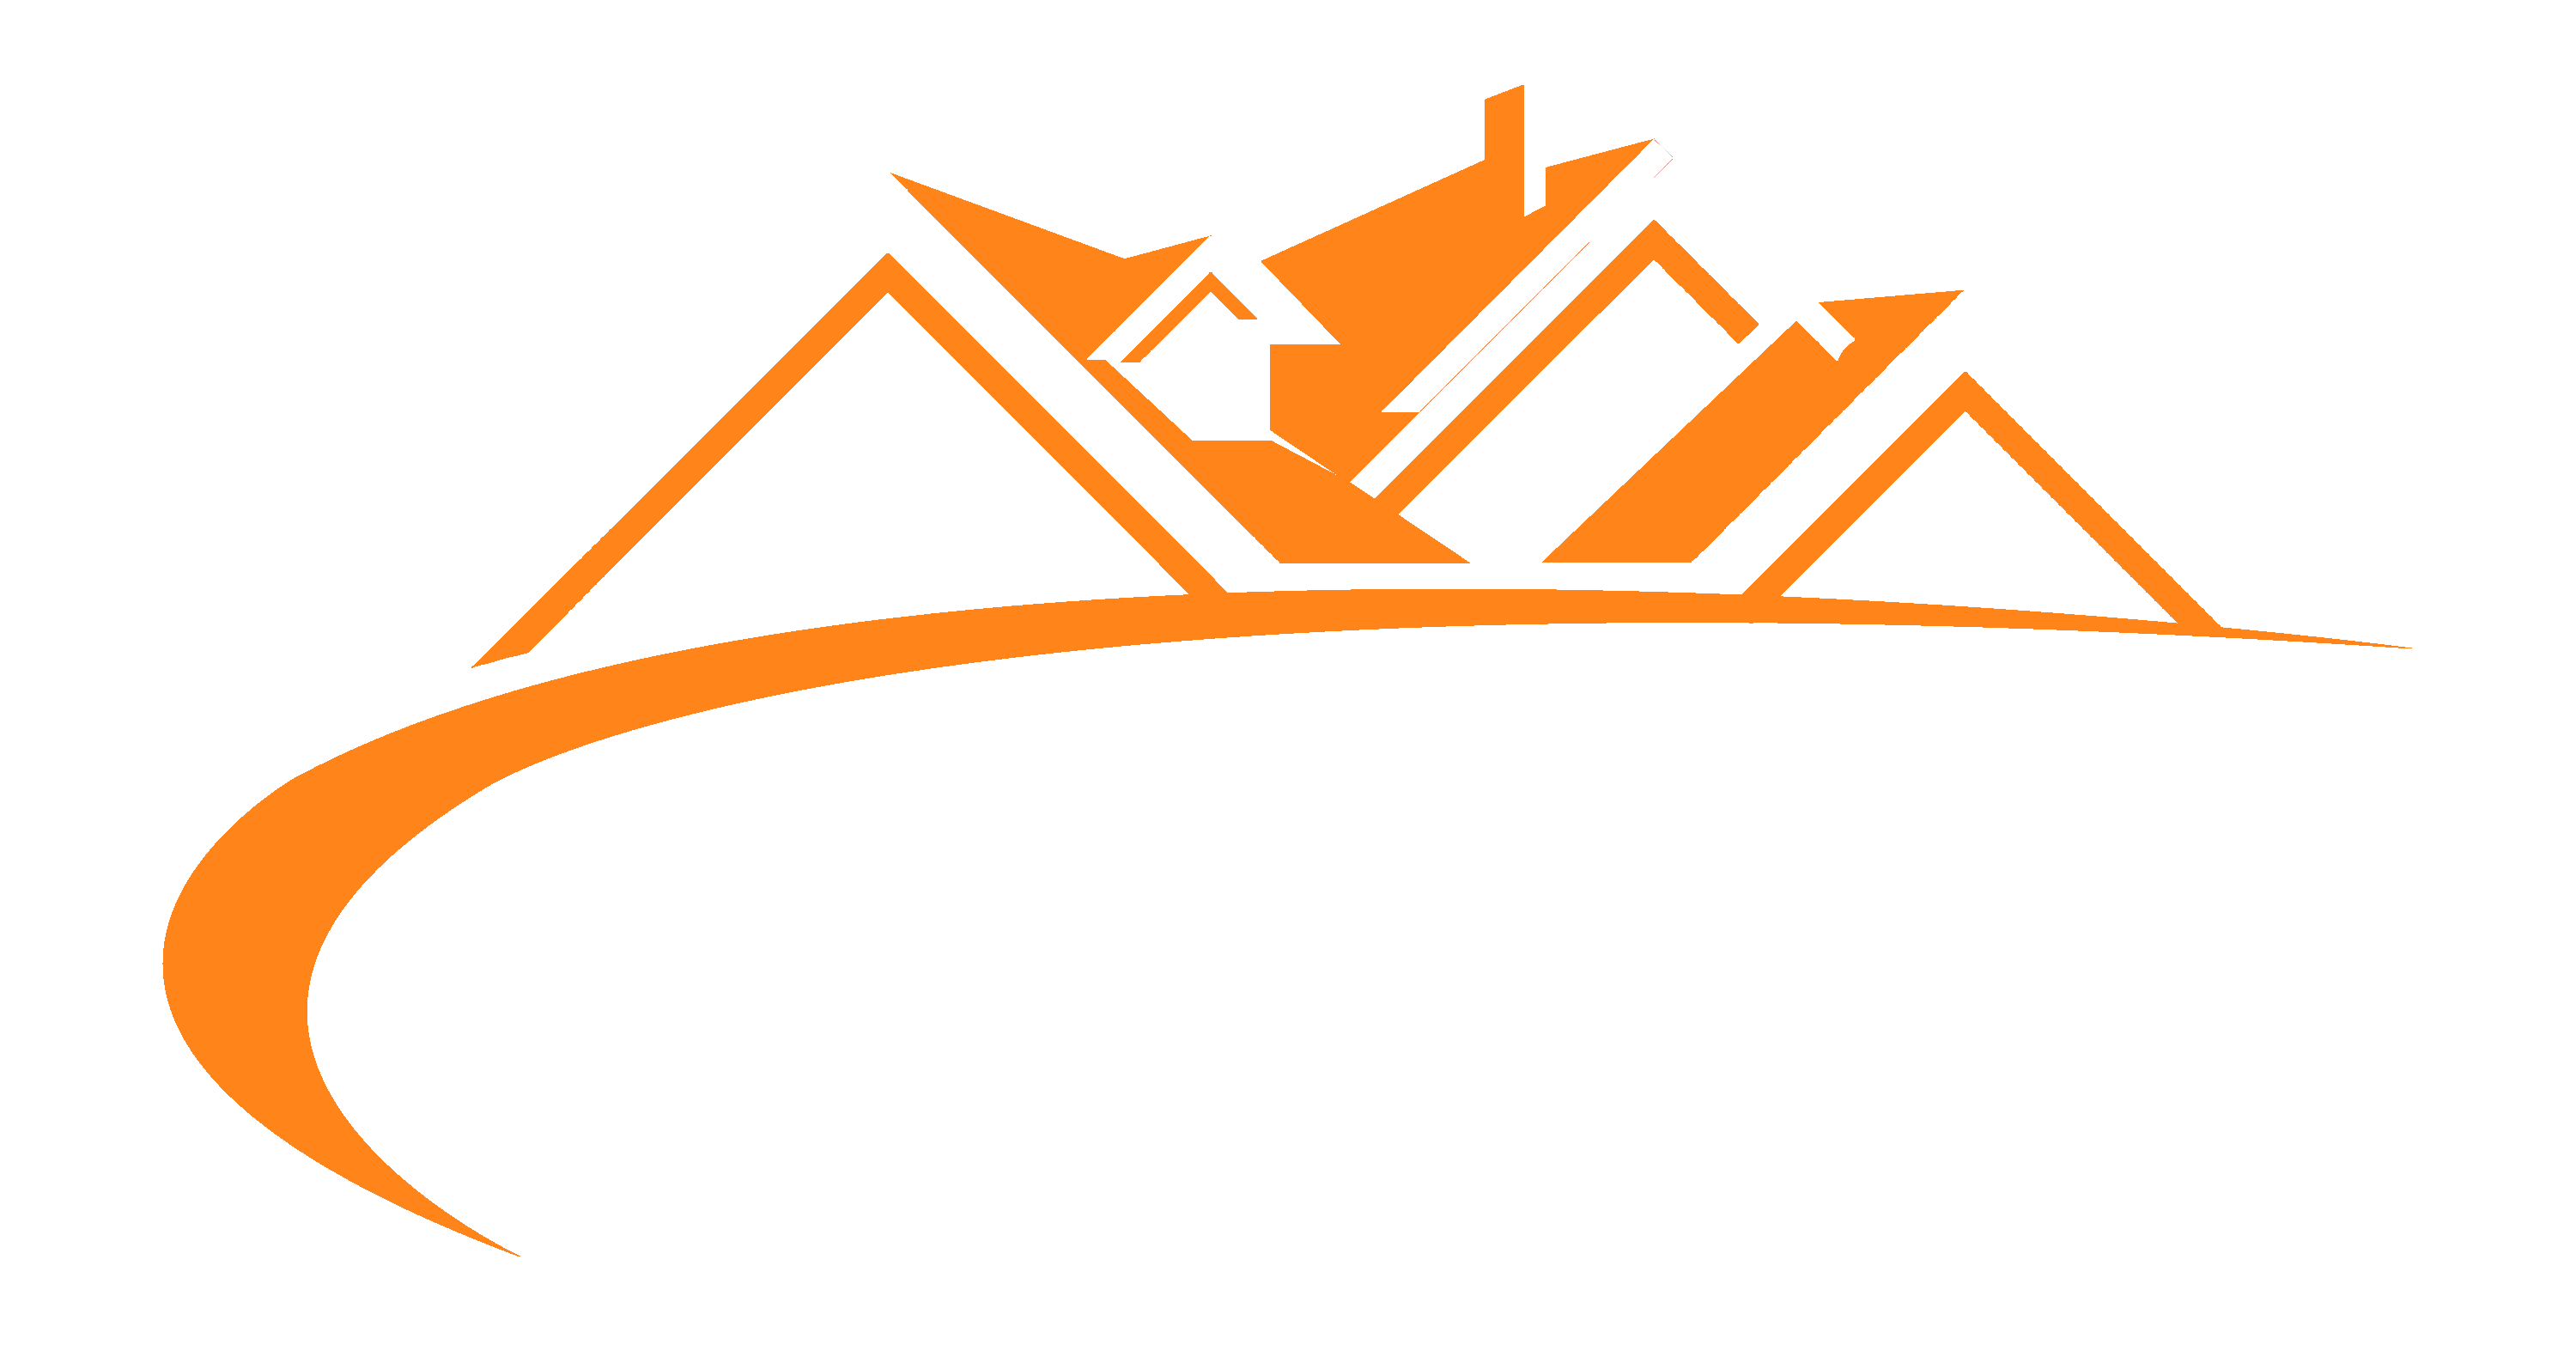 My Property Ad